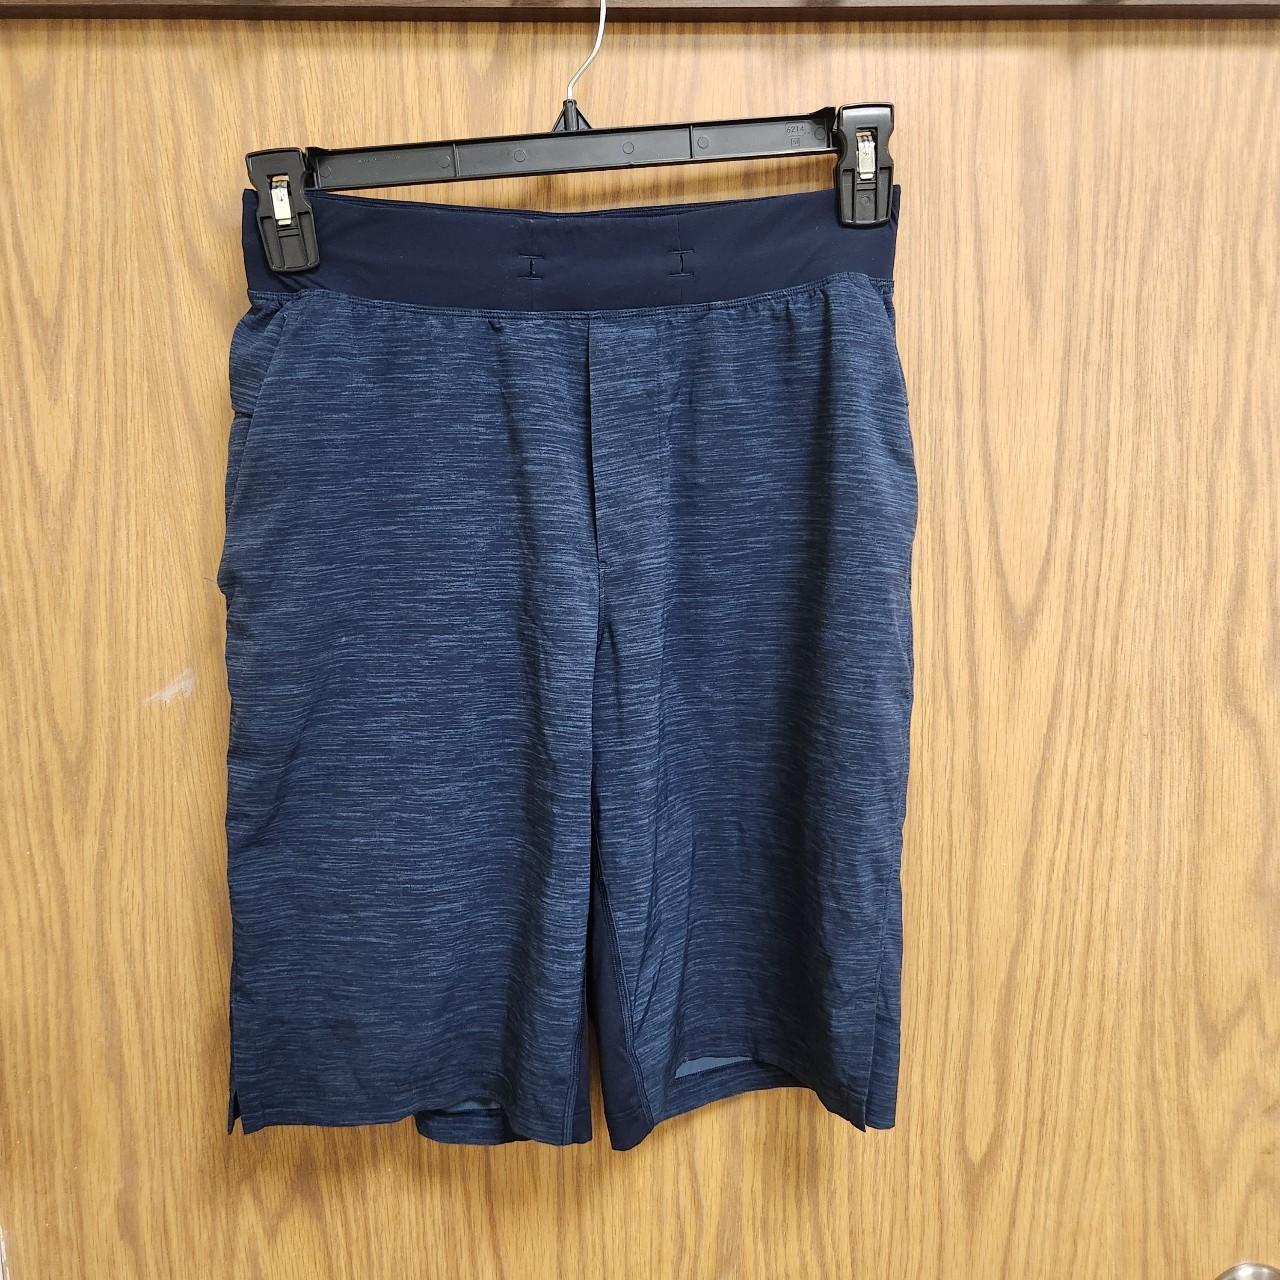 Men's Drawstring Shorts